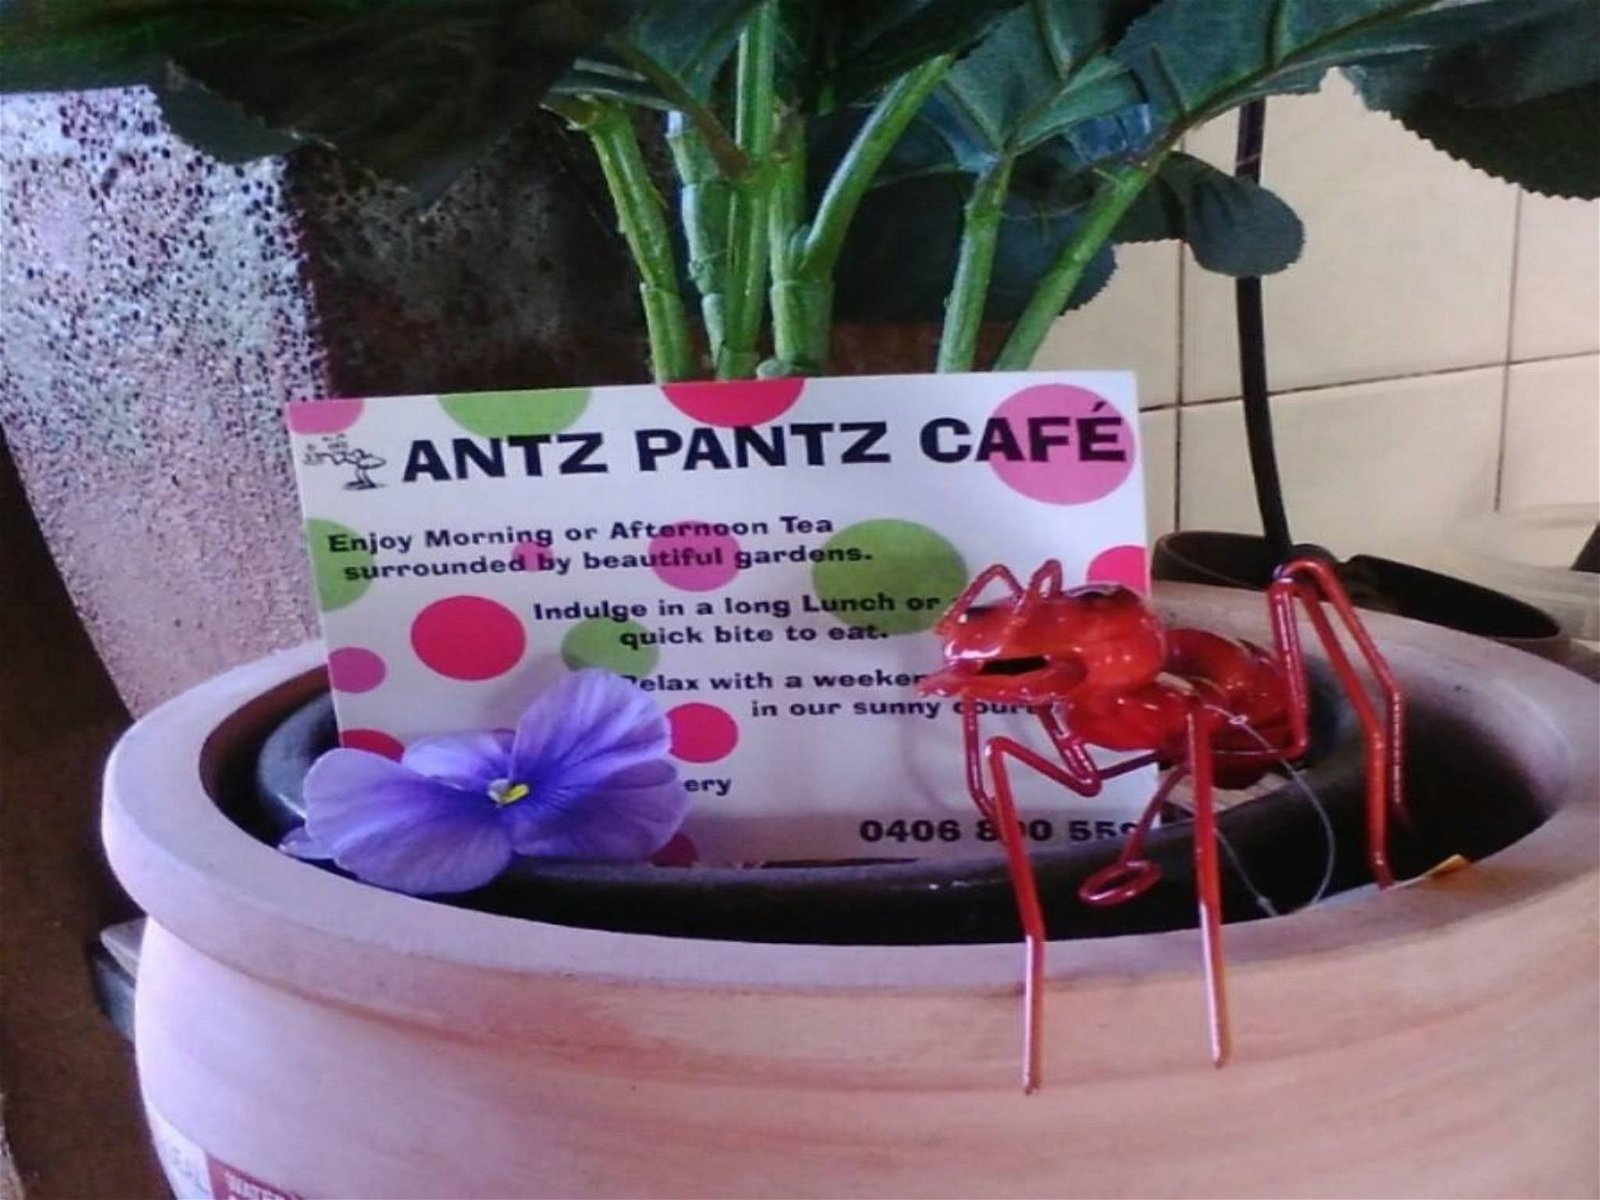 Antz Pantz Cafe - Food Delivery Shop